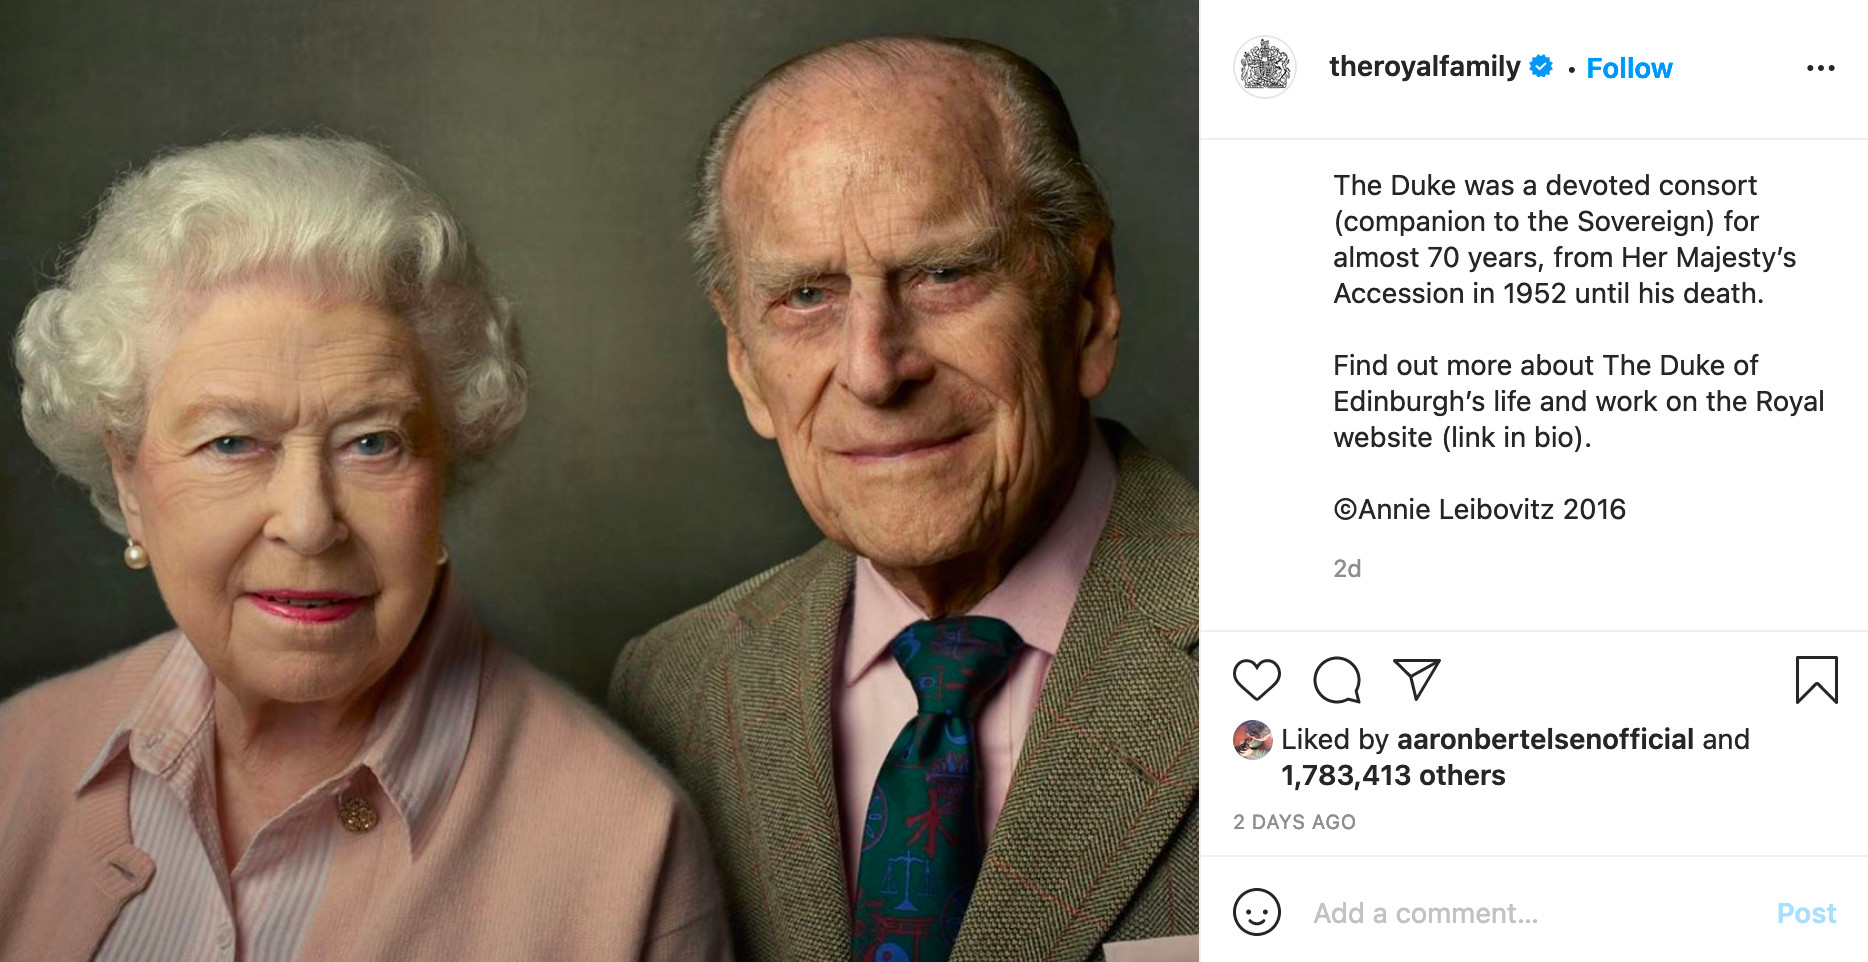 The Royal Family's Instagram post